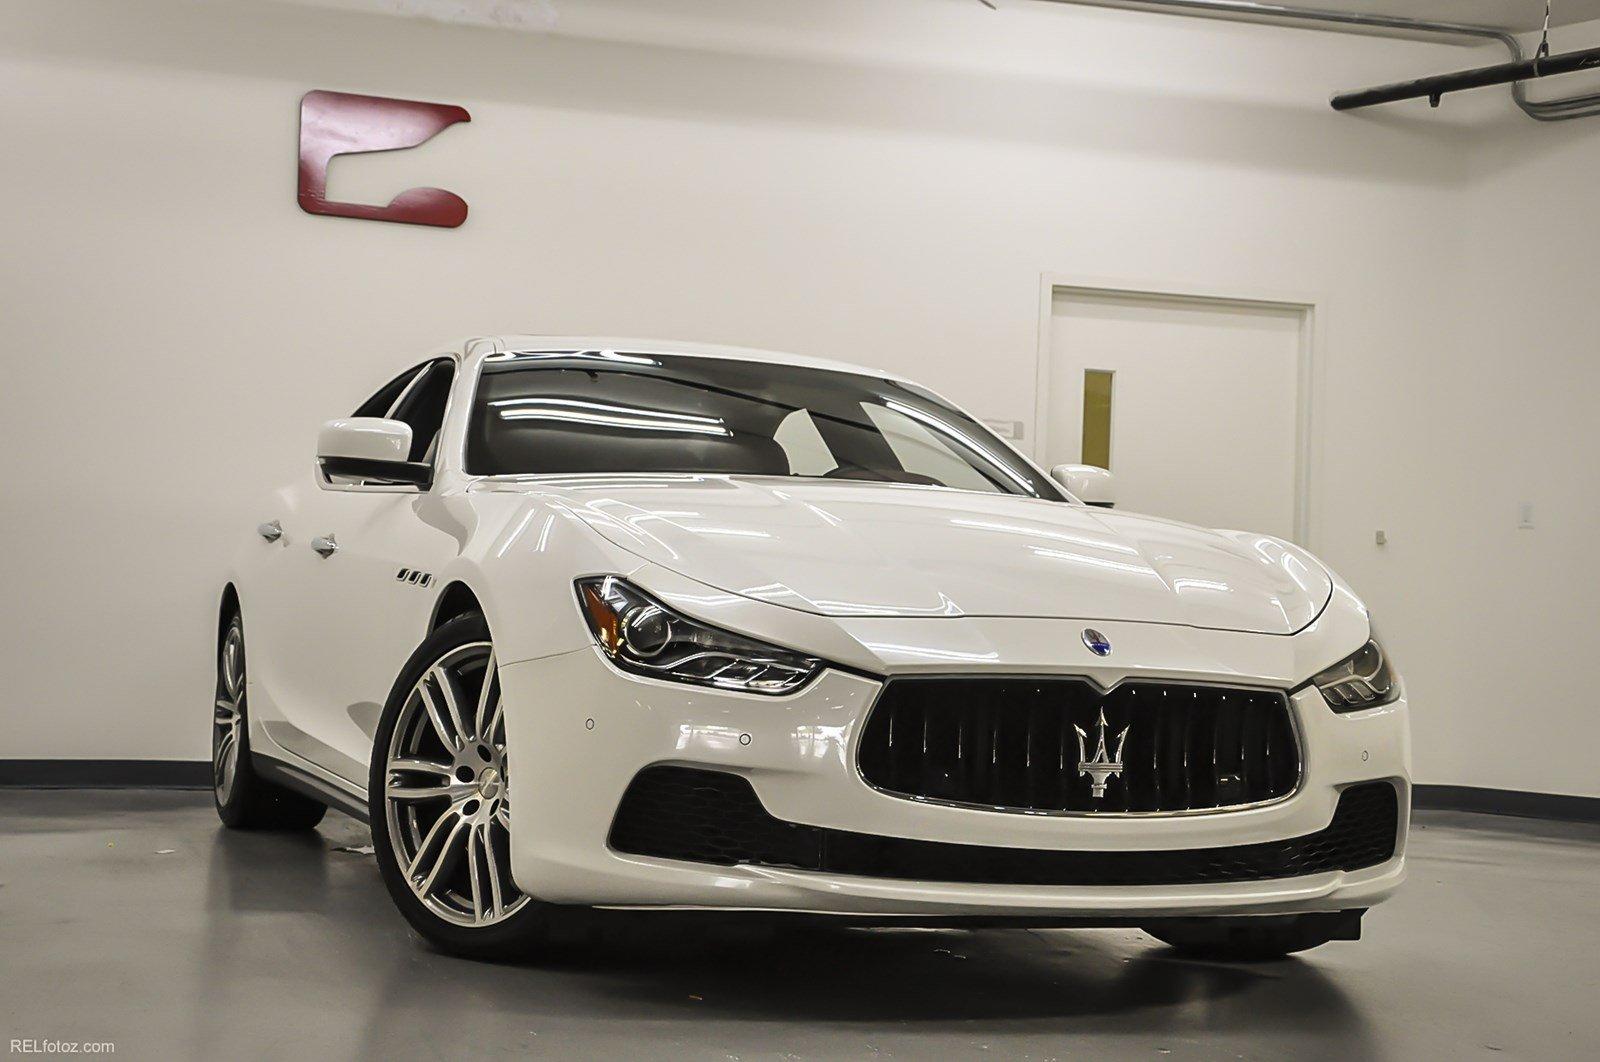 Used 2015 Maserati Ghibli S Q4 for sale Sold at Gravity Autos Marietta in Marietta GA 30060 2